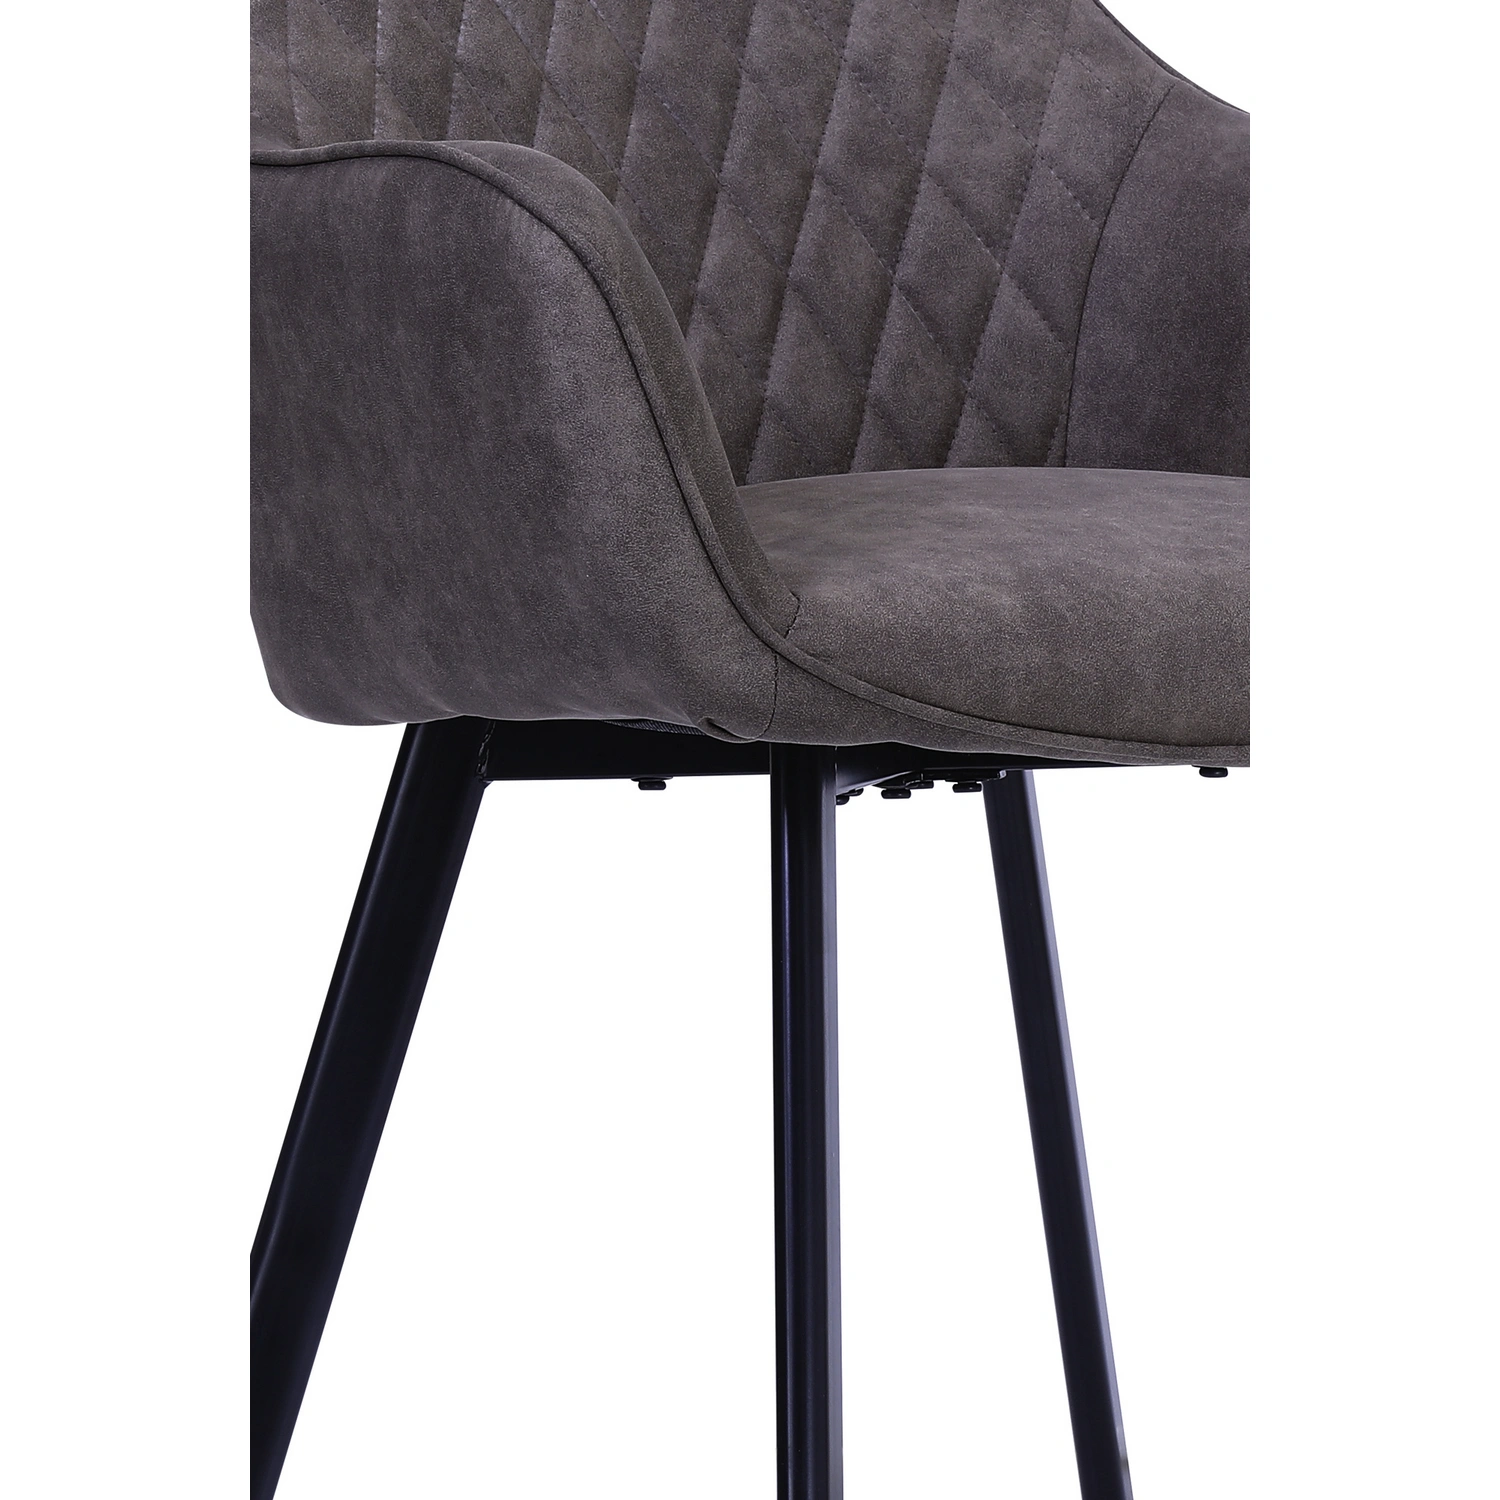 SalesFever Stuhl, Höhe: 84 cm, taupe/schwarz, 2 stk